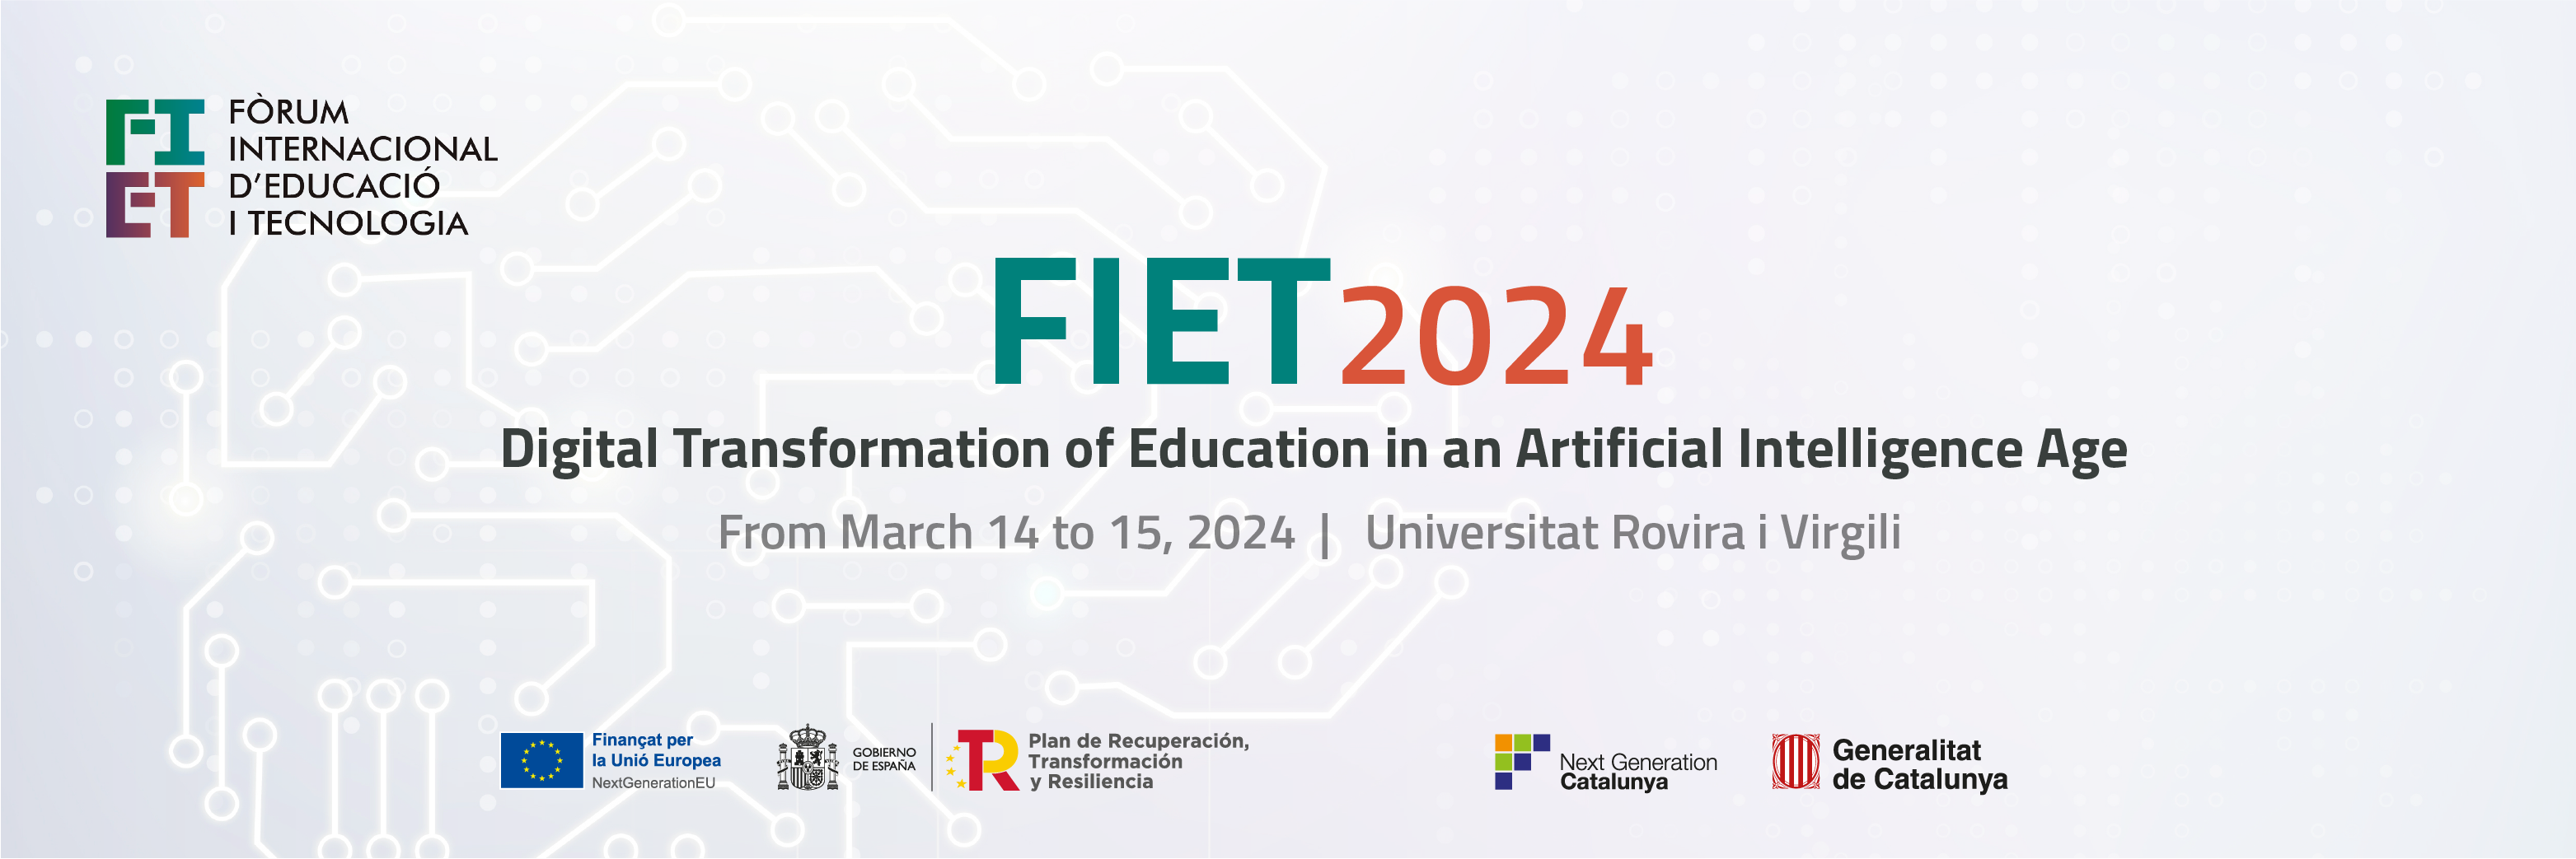 FIET 2024 – Digital Transformation of Education in an Artificial intelligence Age